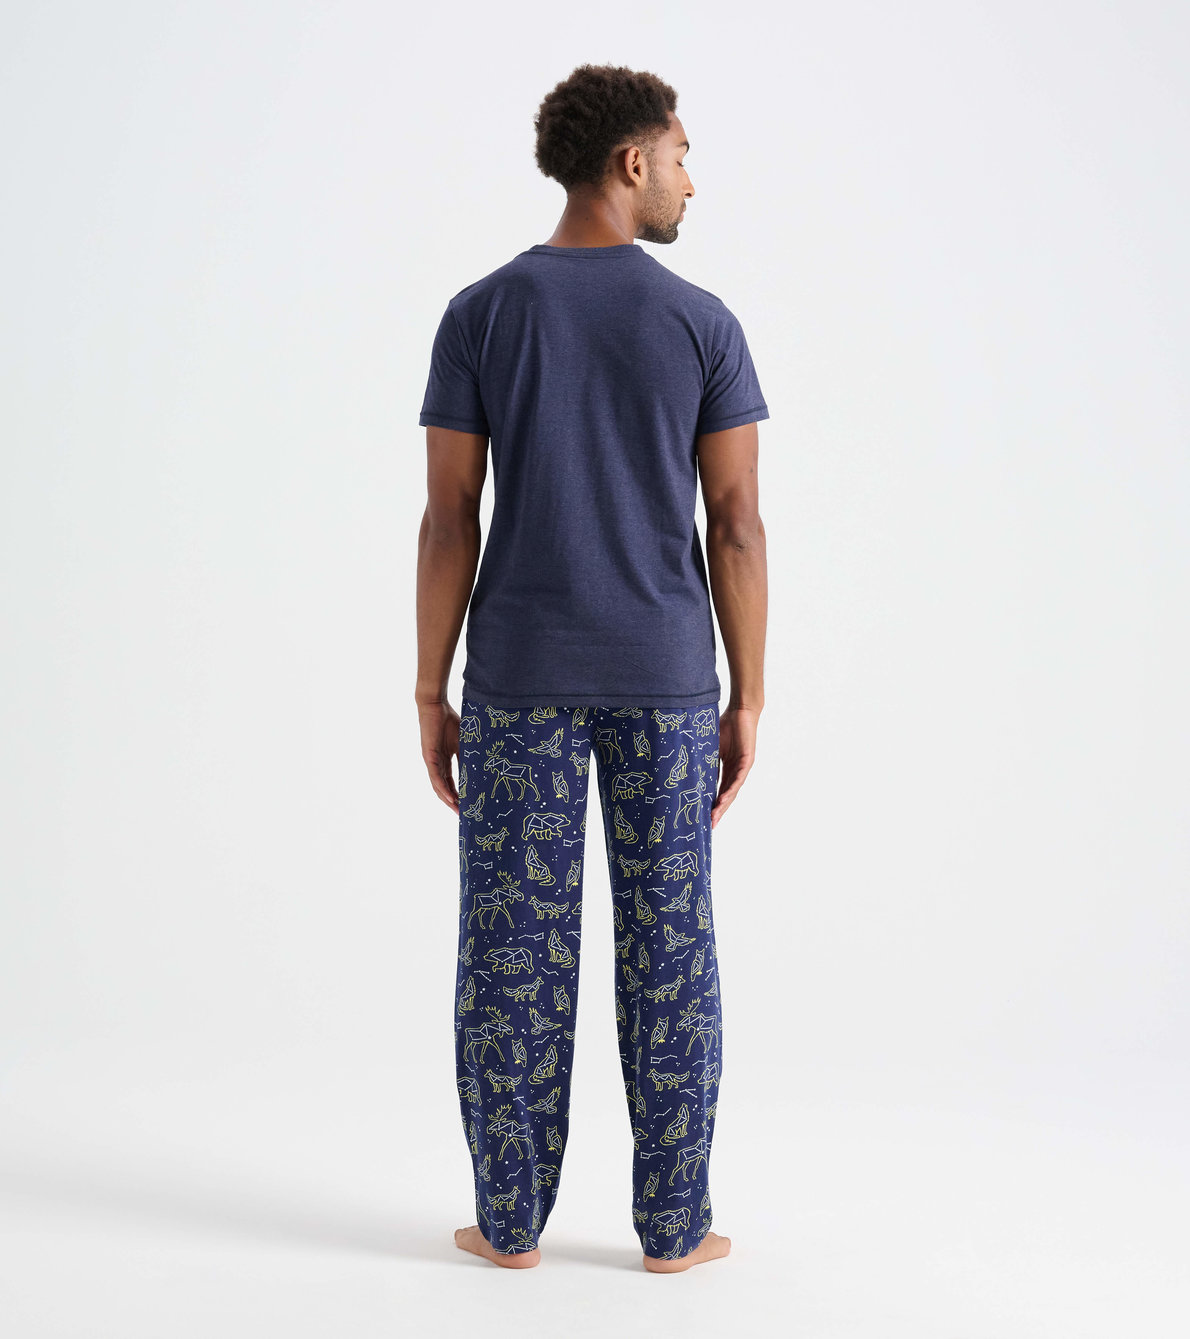 View larger image of Men's Ursa Major T-Shirt and Pants Pajama Separates